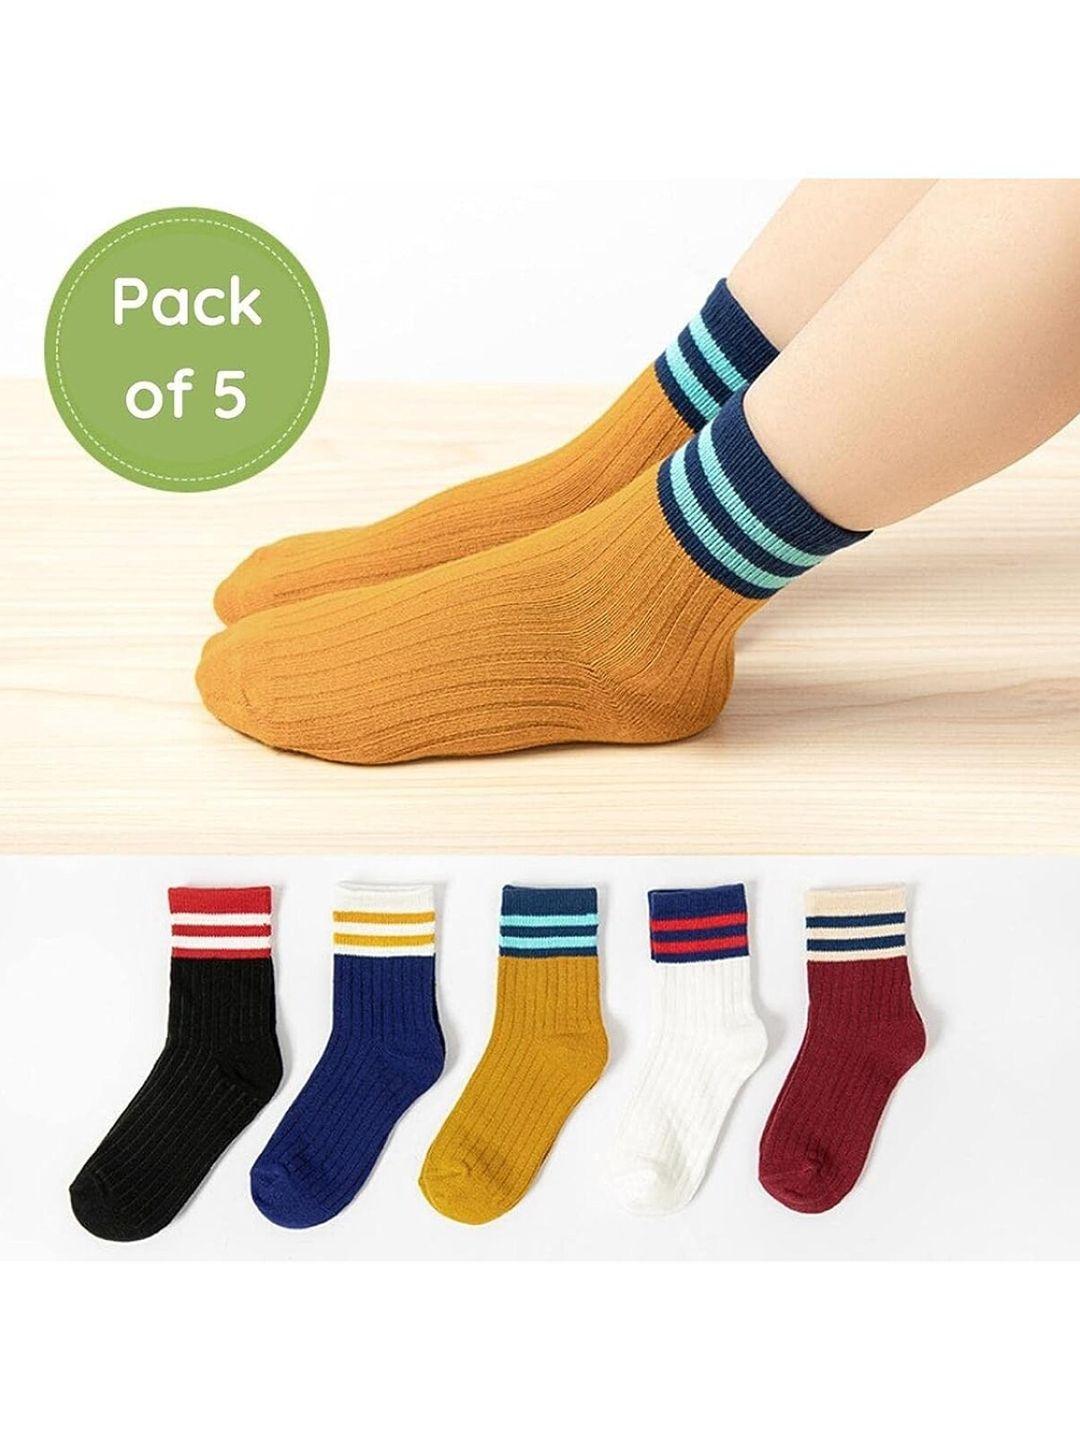 YOUSTYLO Kids Pack Of 5 Printed Ankle Socks